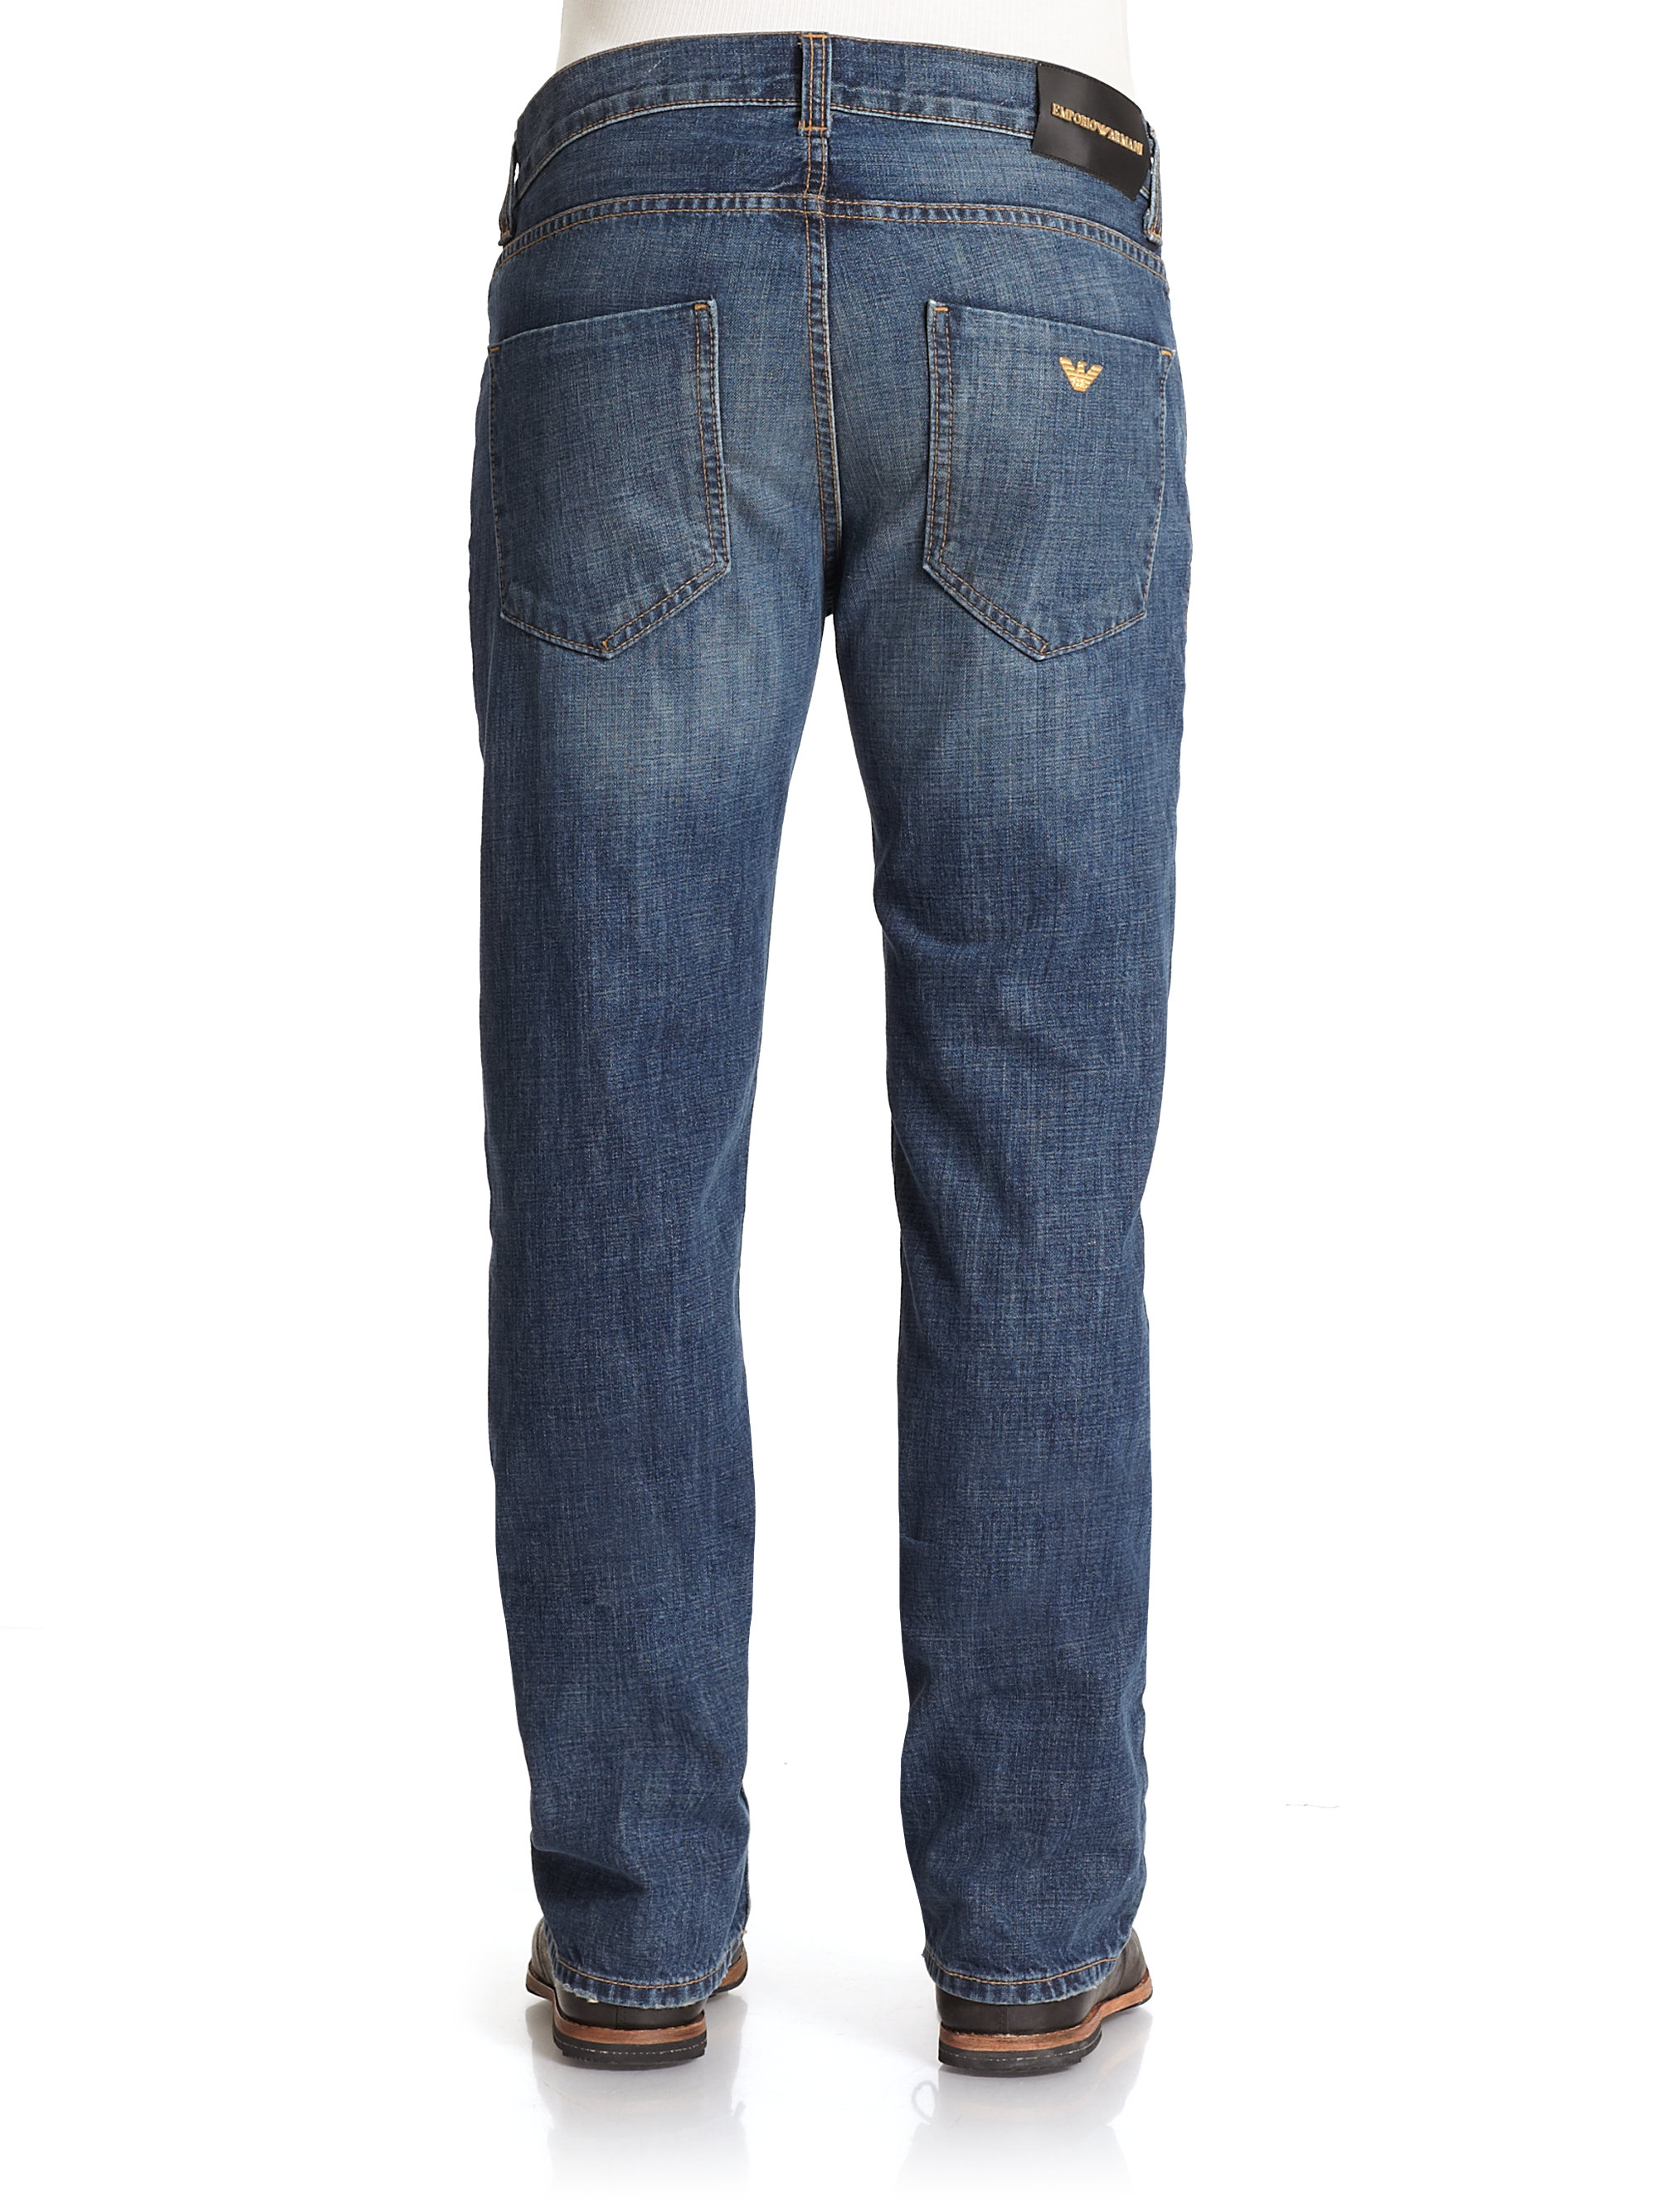 Lyst - Emporio Armani Brad Darkwash Straightleg Jeans in Blue for Men